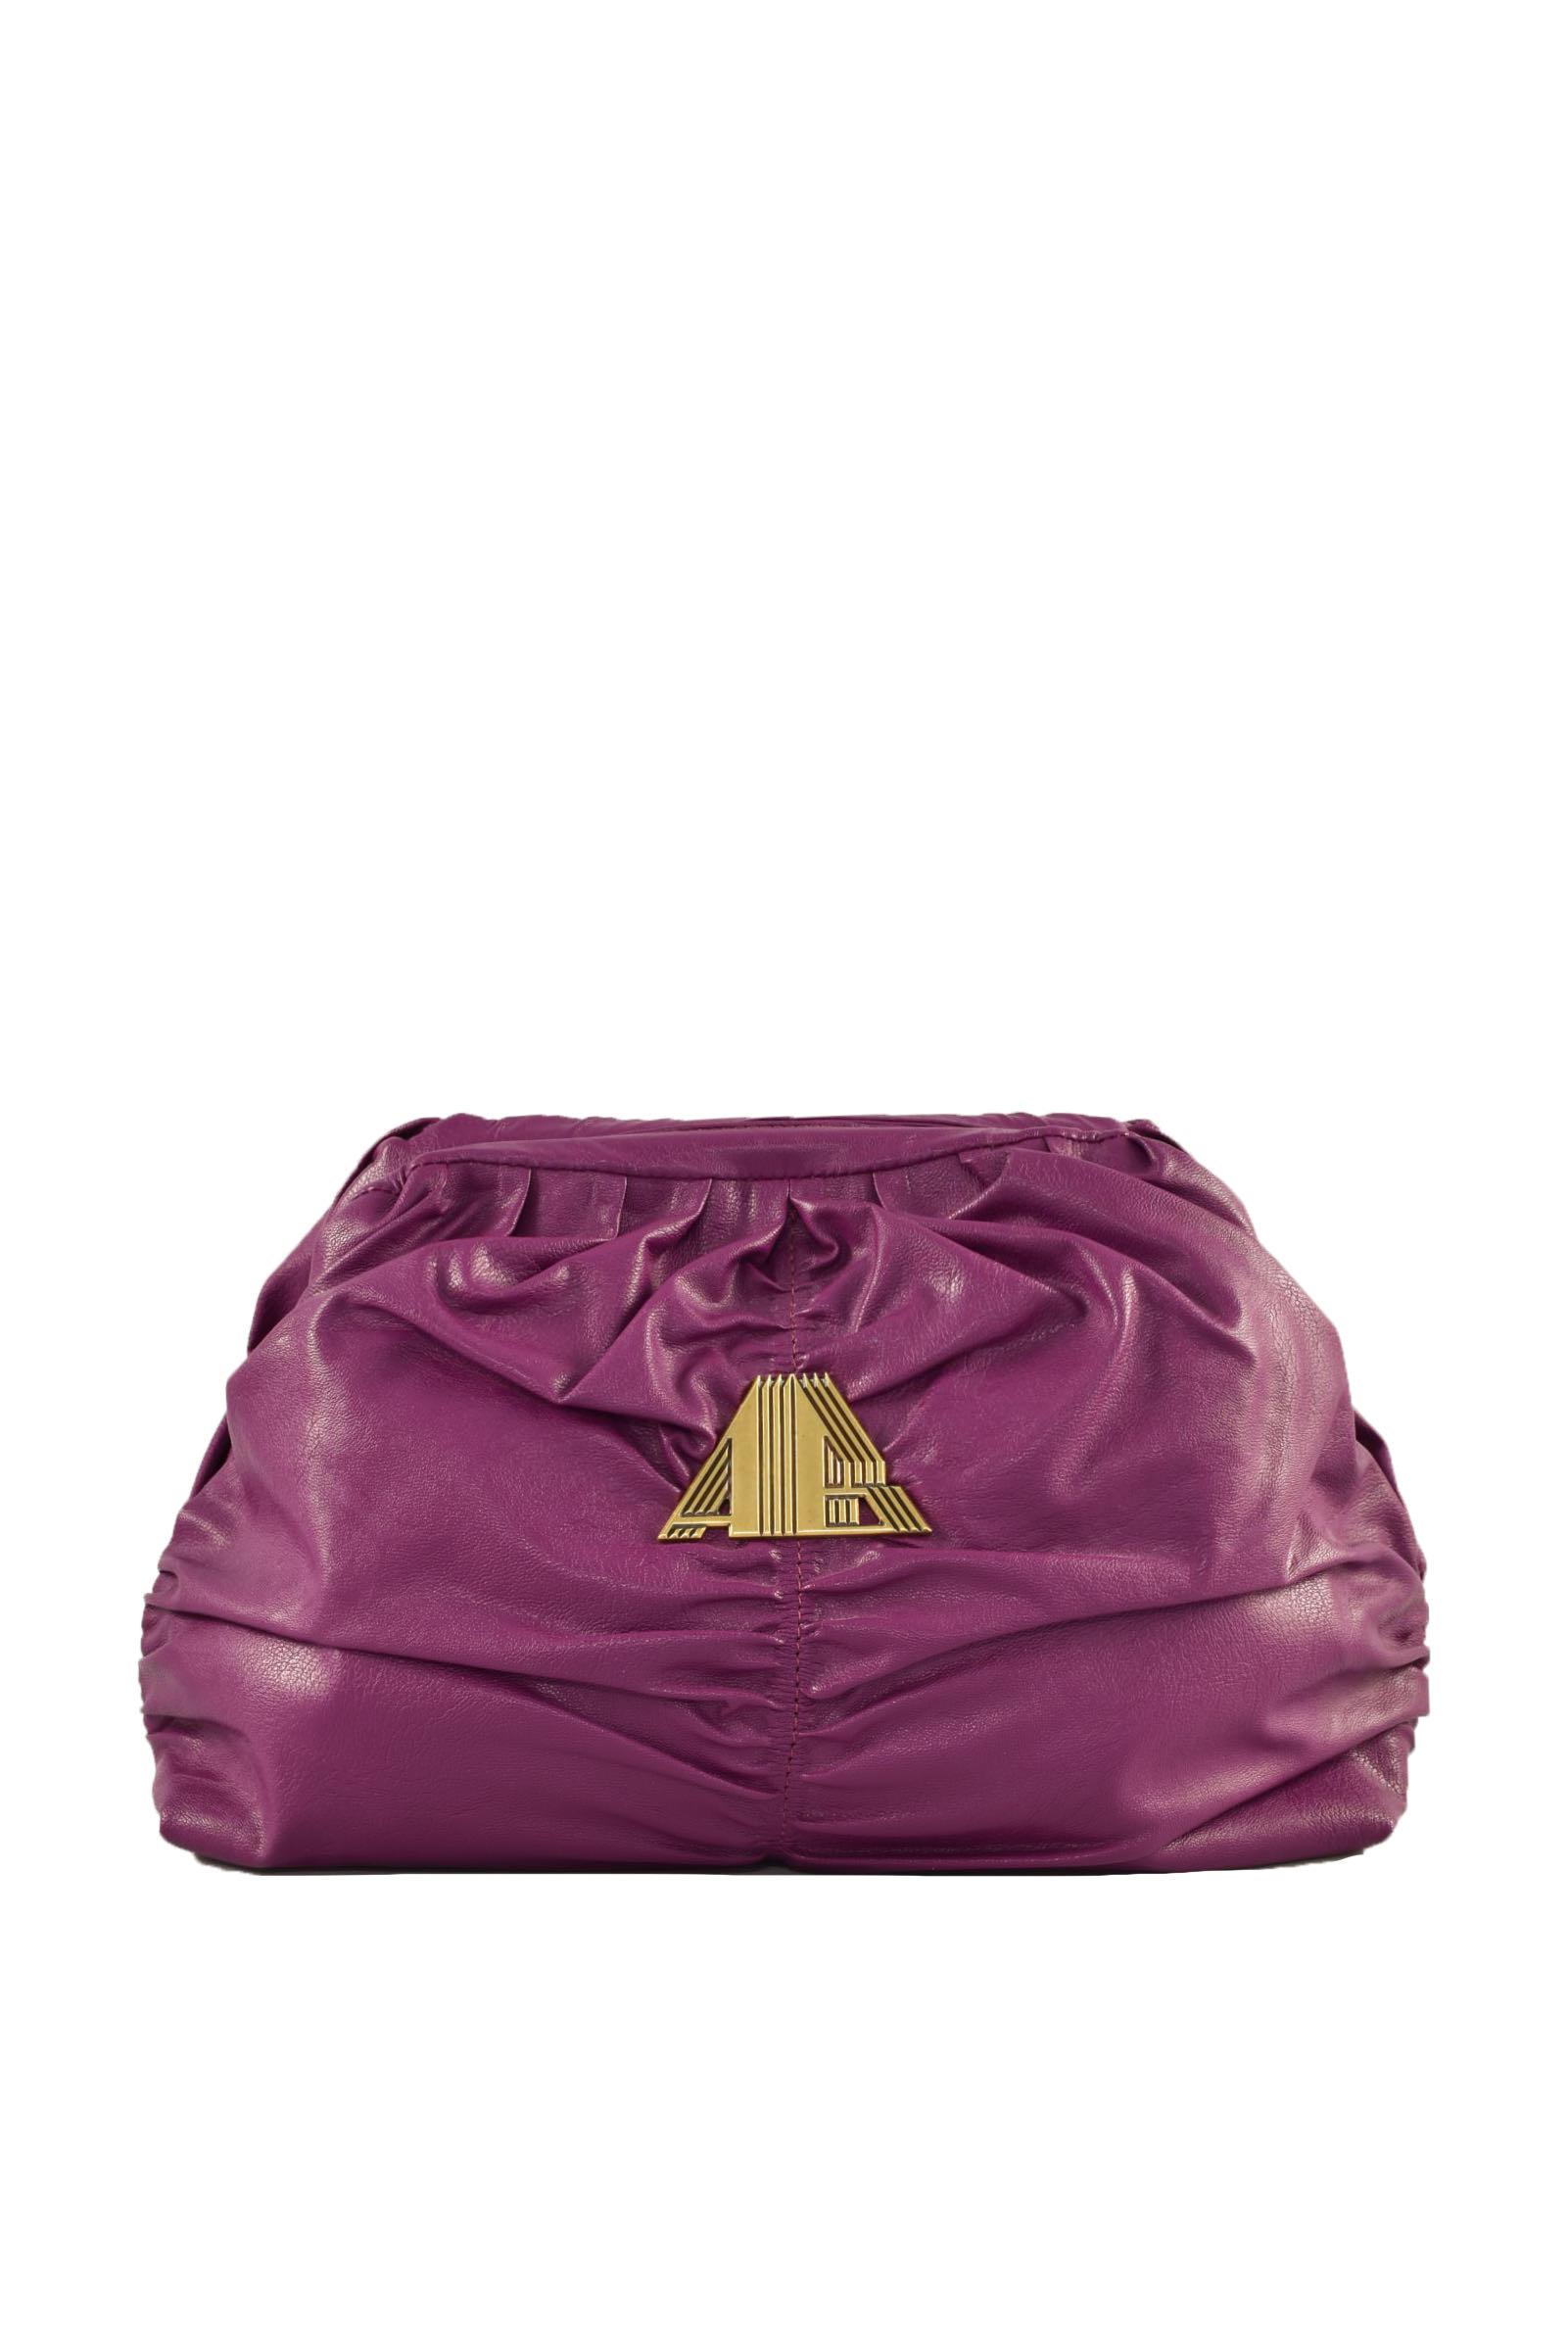 Aniye By Women's Violet Handbag